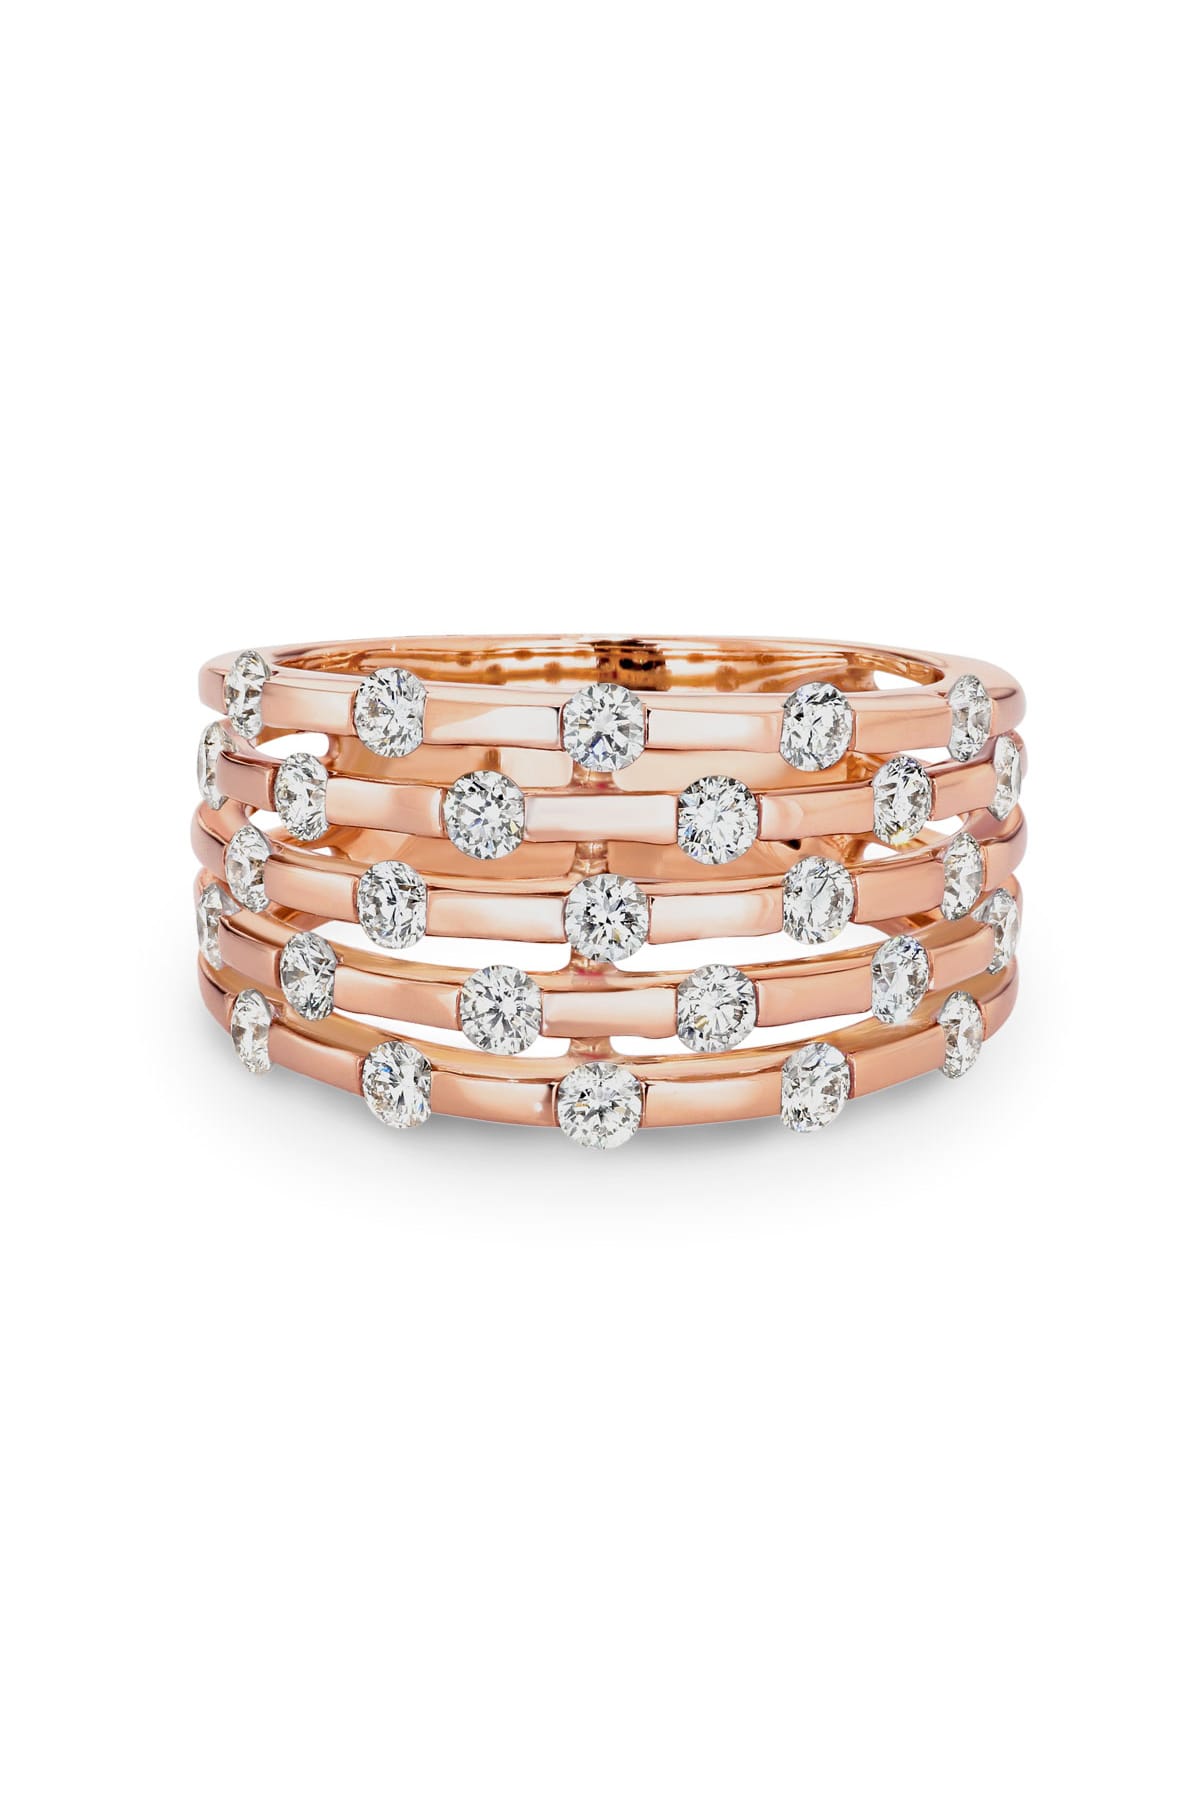 18 Carat Rose Gold Diamond Dress Ring available at LeGassick Diamonds and Jewellery Gold Coast, Australia.